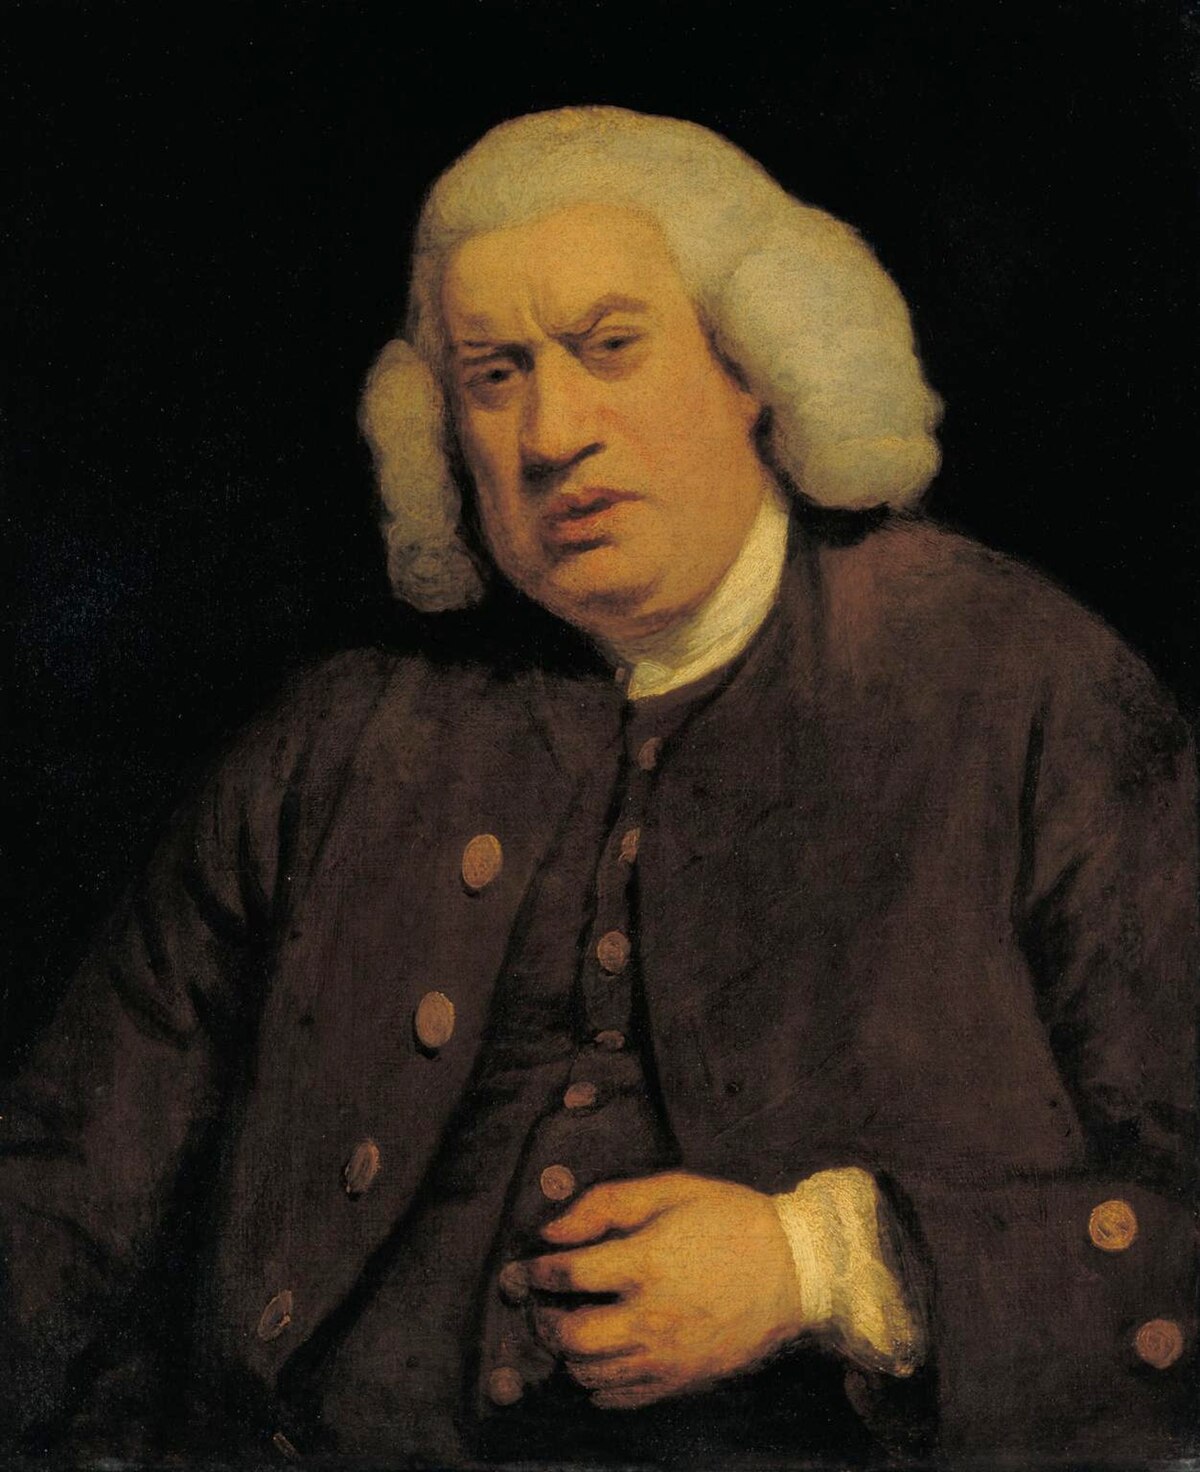 Samuel Johnson - Wikipedia